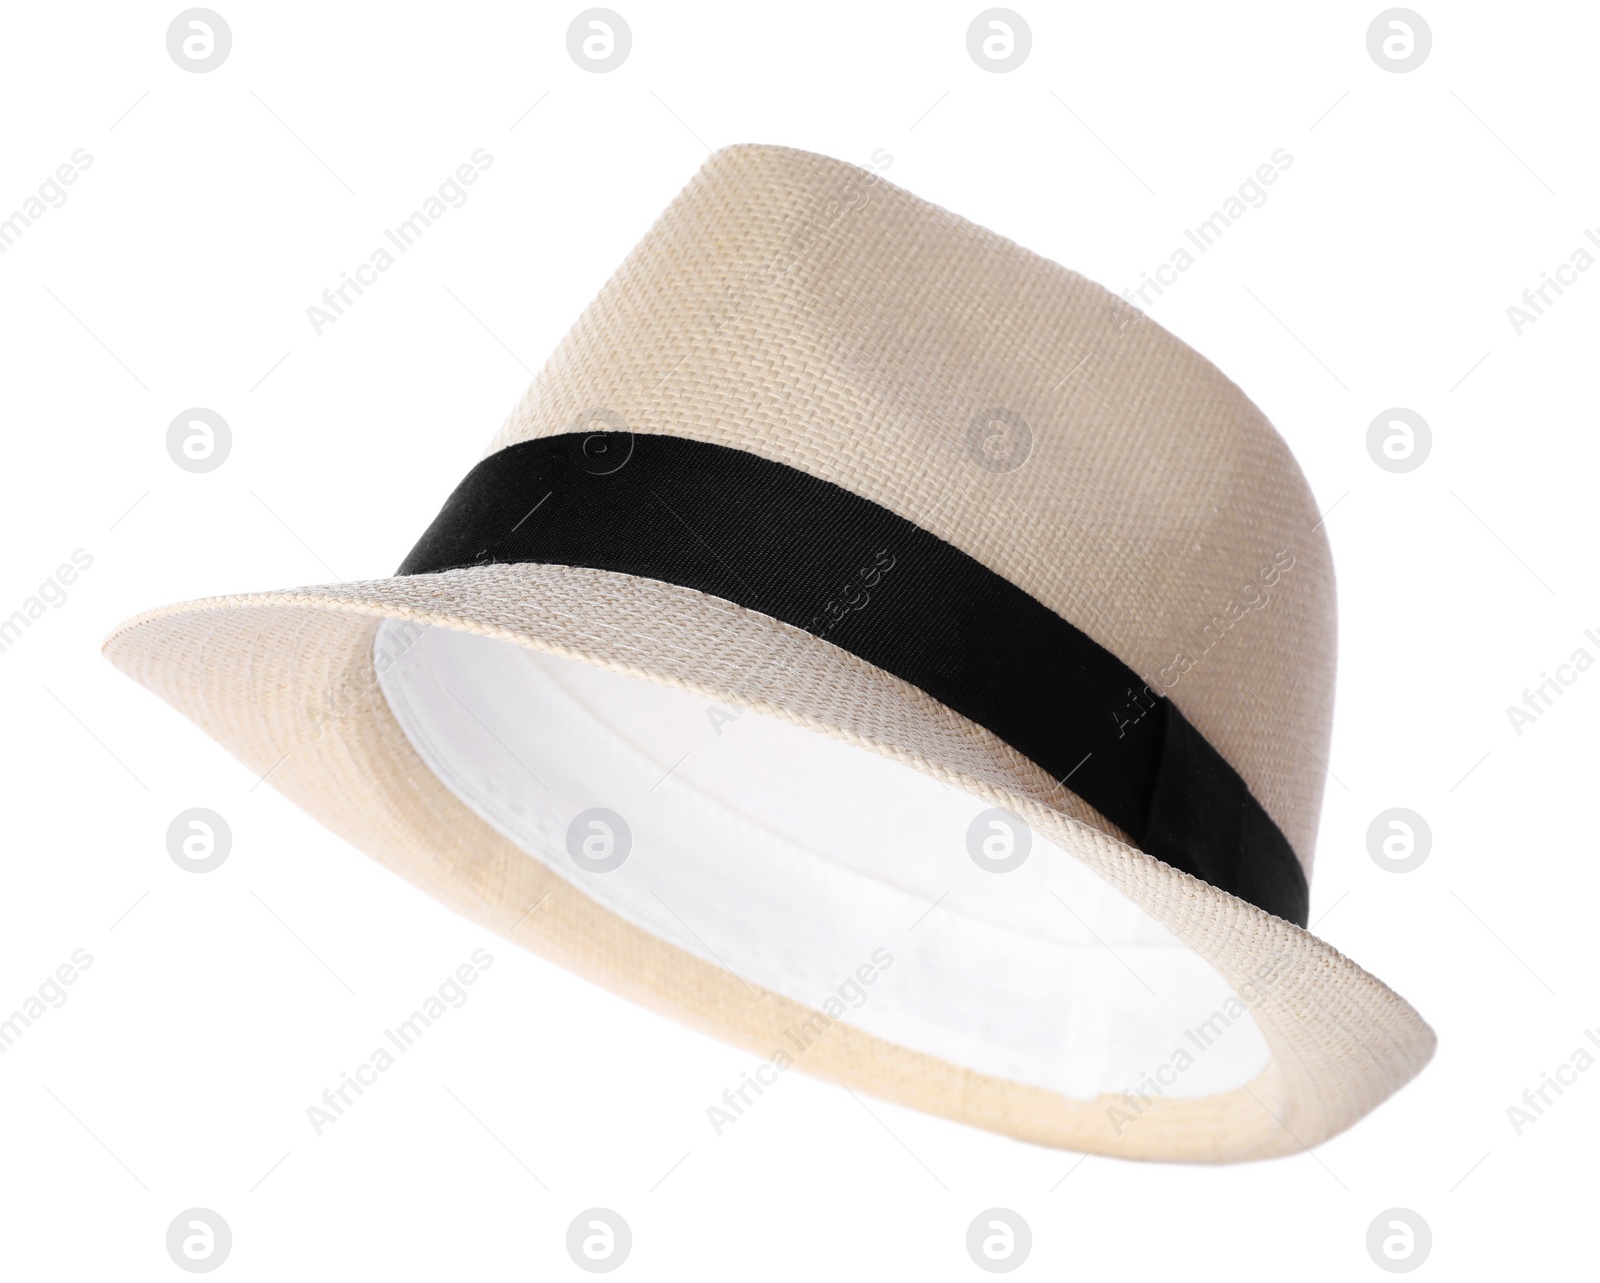 Photo of Stylish hat isolated on white. Beach accessory